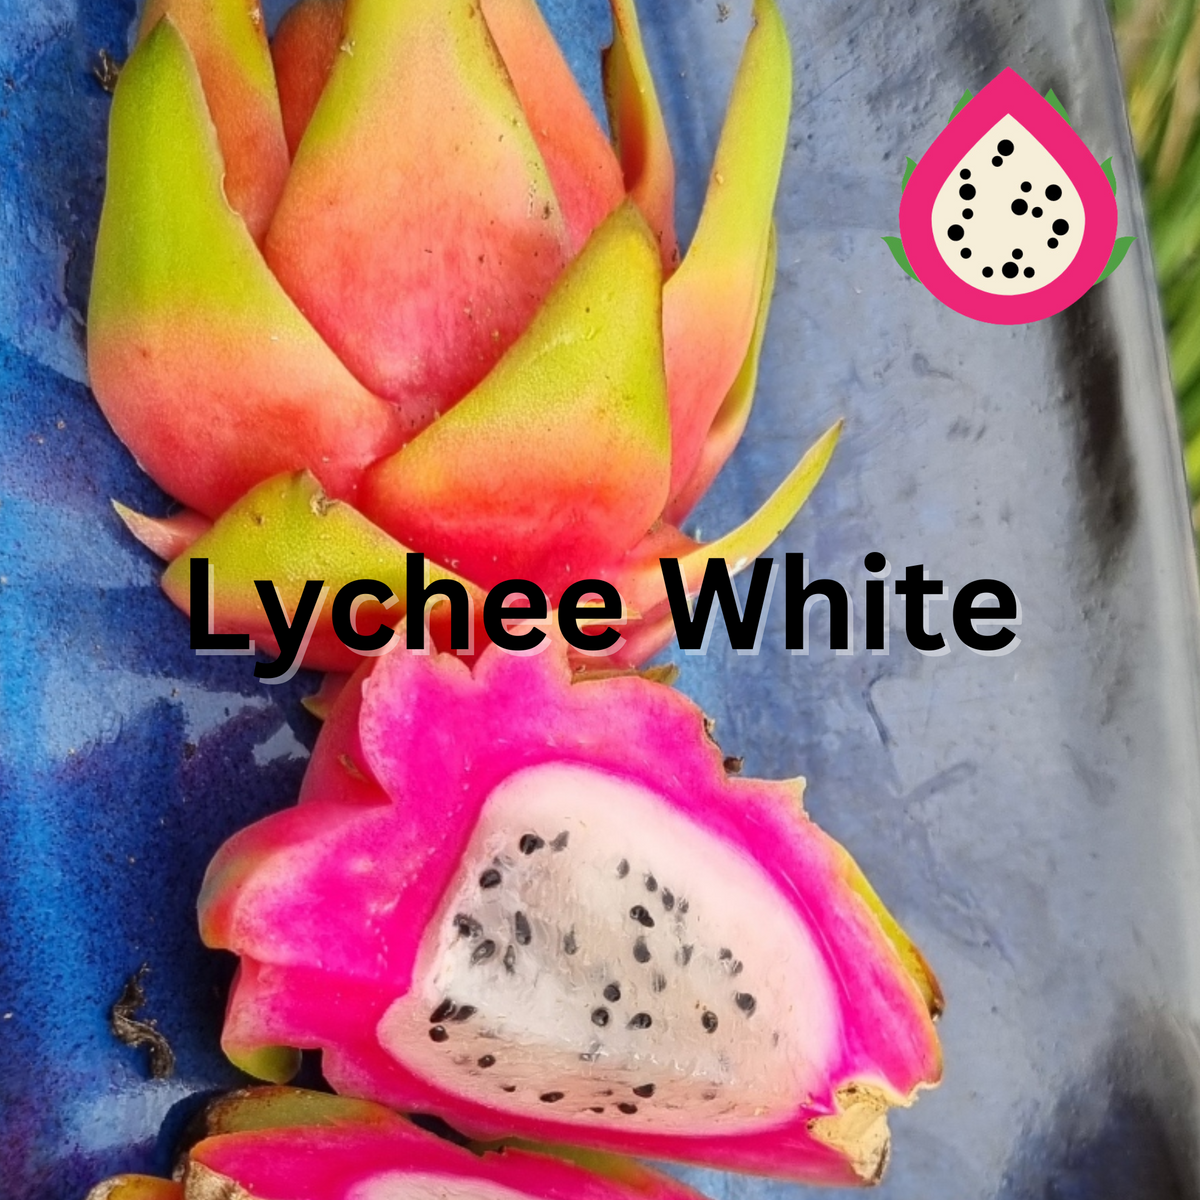 Lychee White Dragon fruit